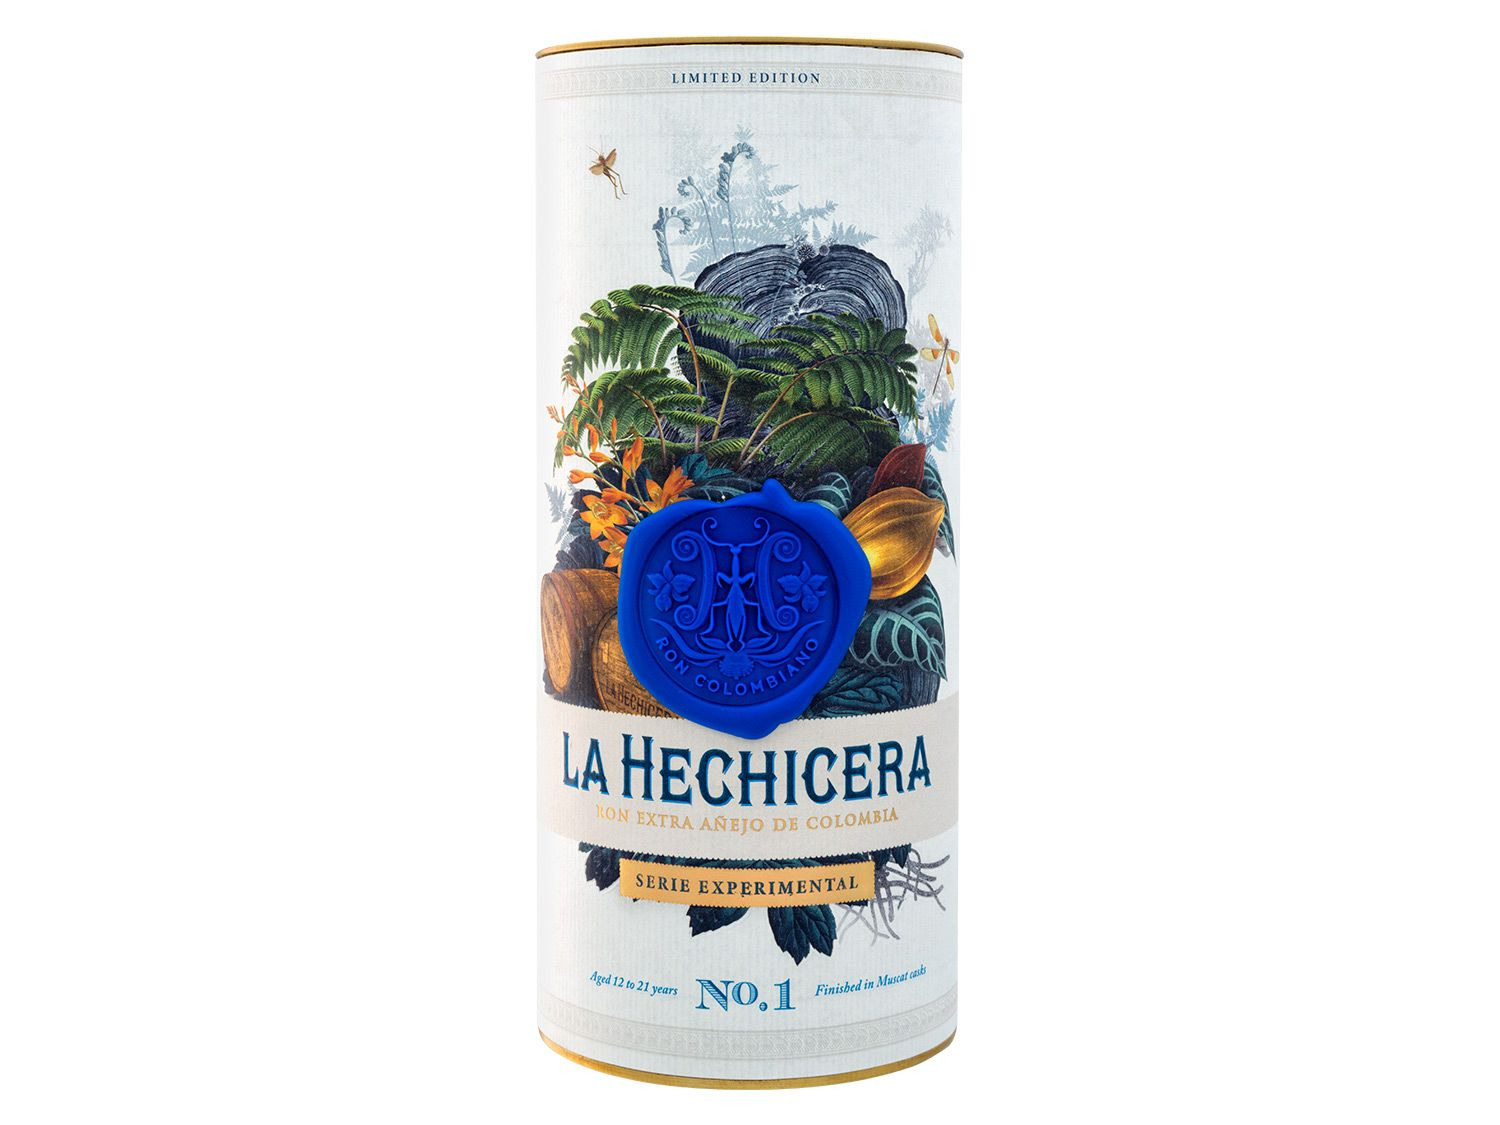 La Hechicera Rum Serie Experimental No. 1 mit Geschenk…